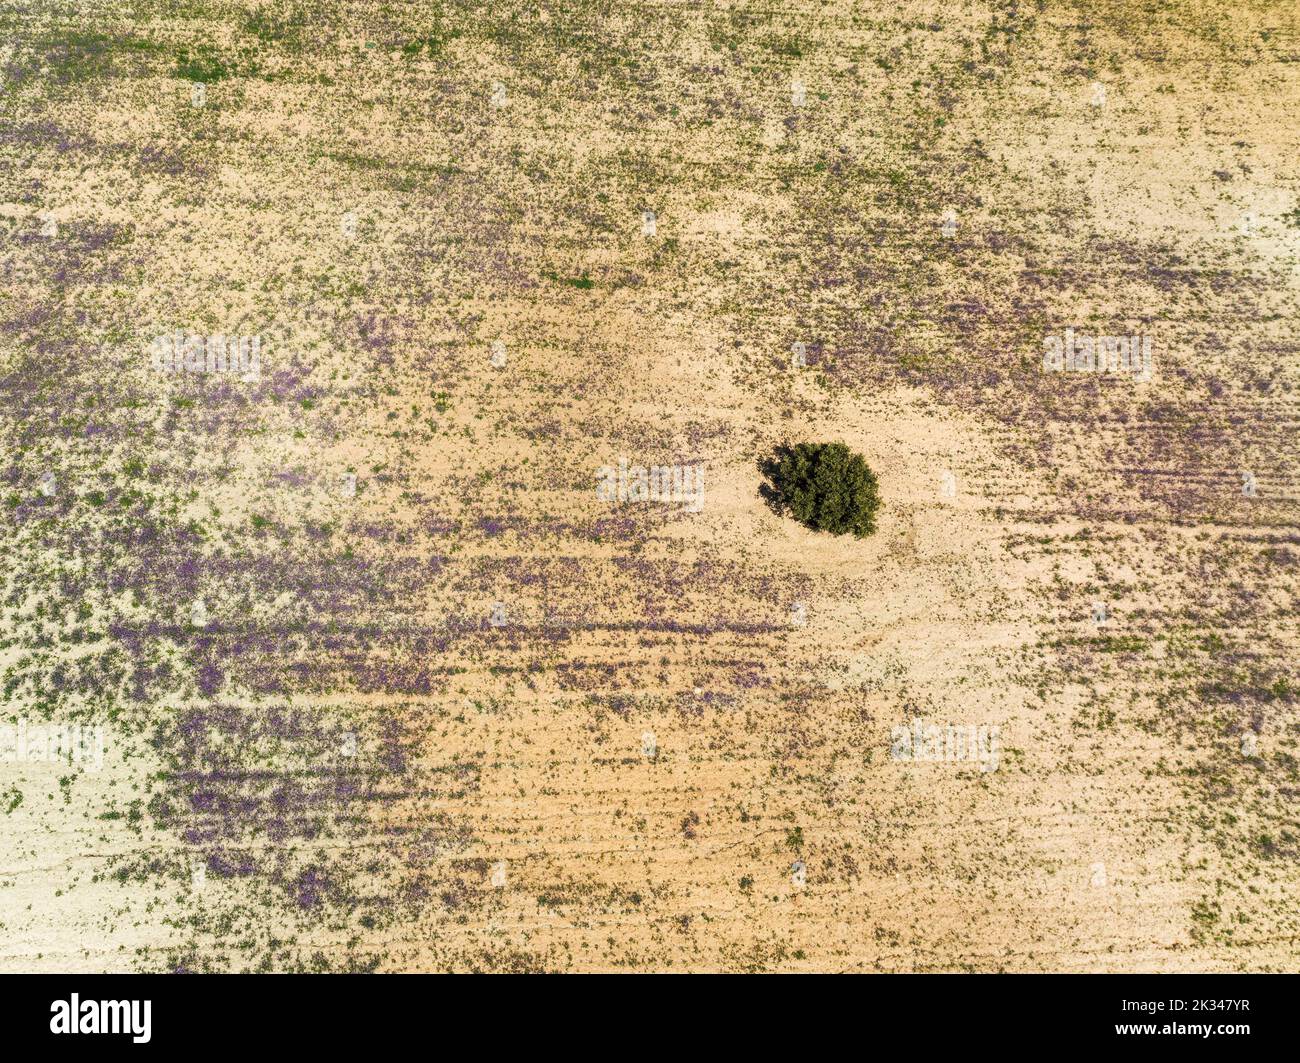 Holm Oak (Quercus ilex) in a field, aerial view, drone shot, Almeria province, Andalusia, Spain Stock Photo